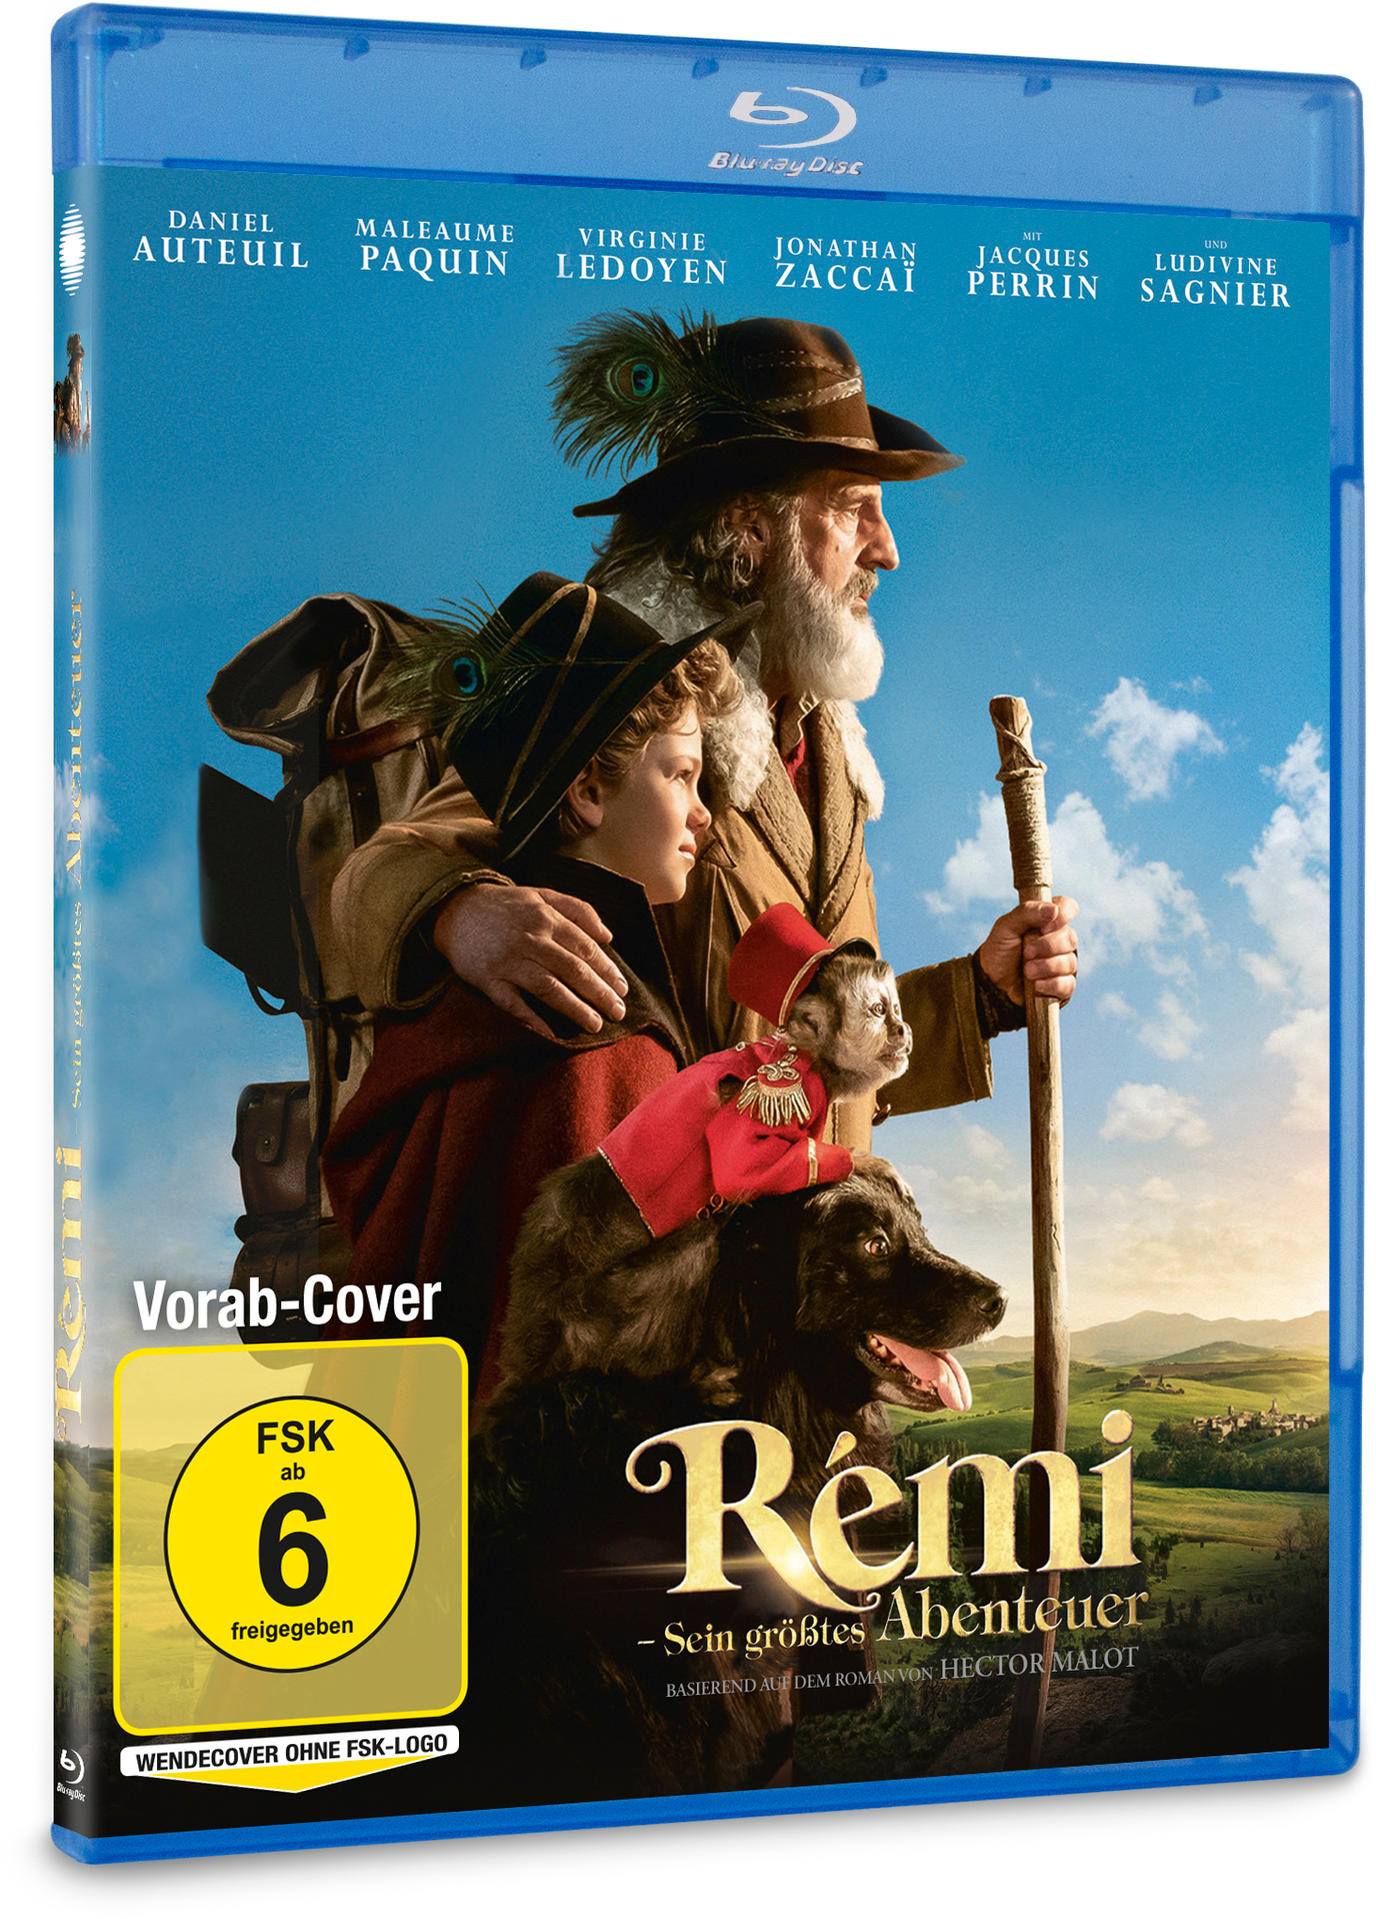 - Abenteuer Blu-ray Rémi größtes Sein